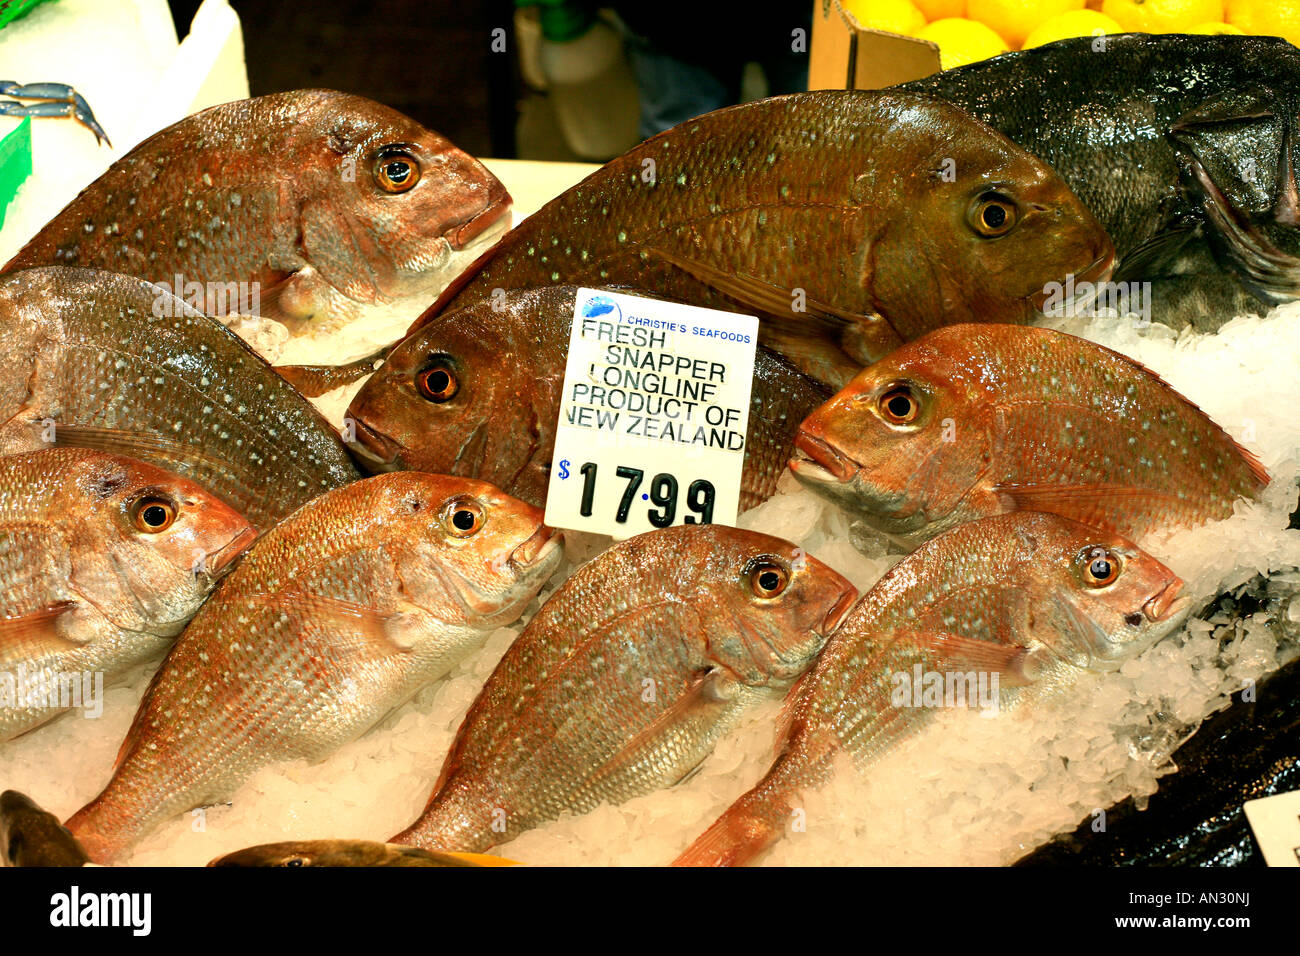 Nuova Zelanda lungo la linea Snapper a Christies Sydney Fish Market Foto Stock